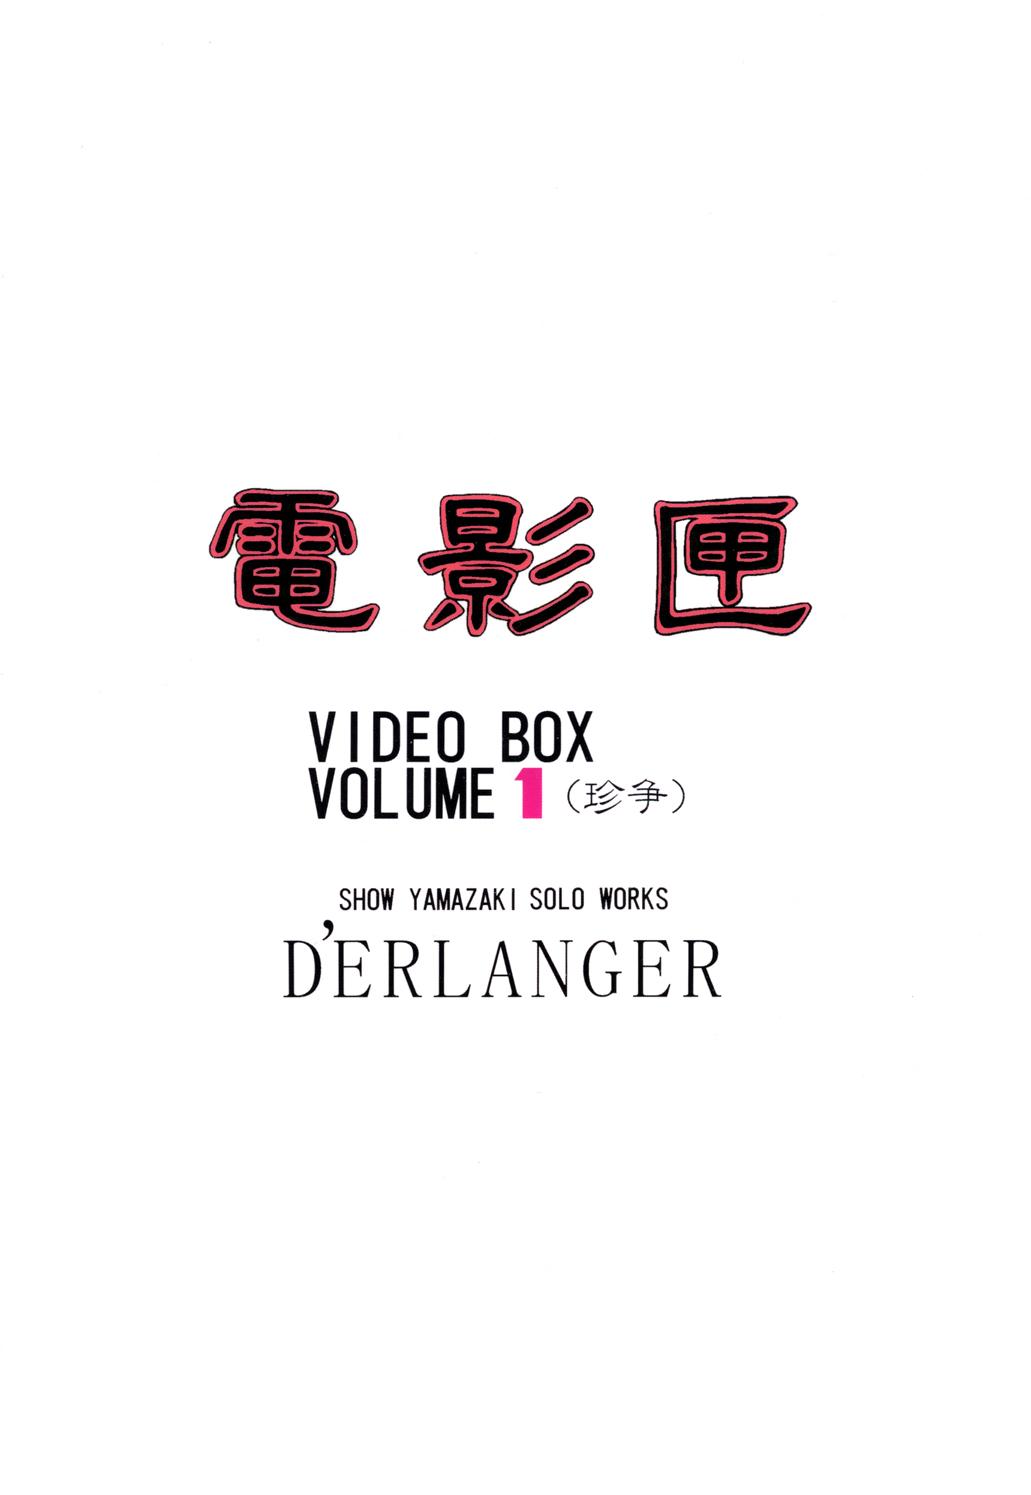 Denkagekou VIDEO BOX VOLUME 1 14